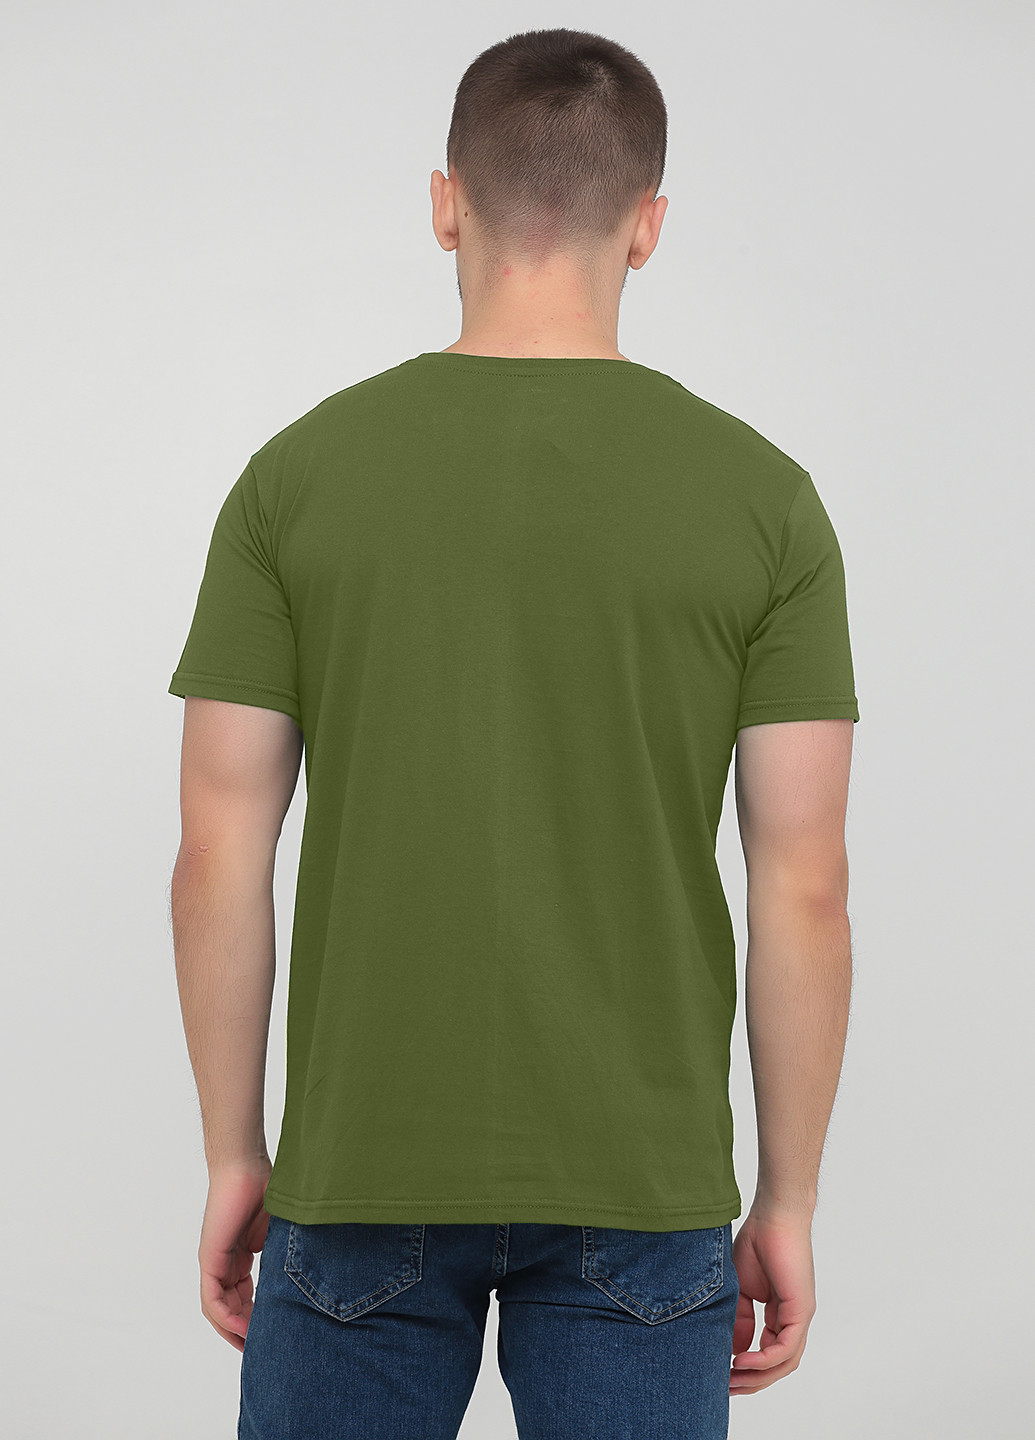 Оливковая футболка мужская м385-24 оливковая с коротким рукавом Malta